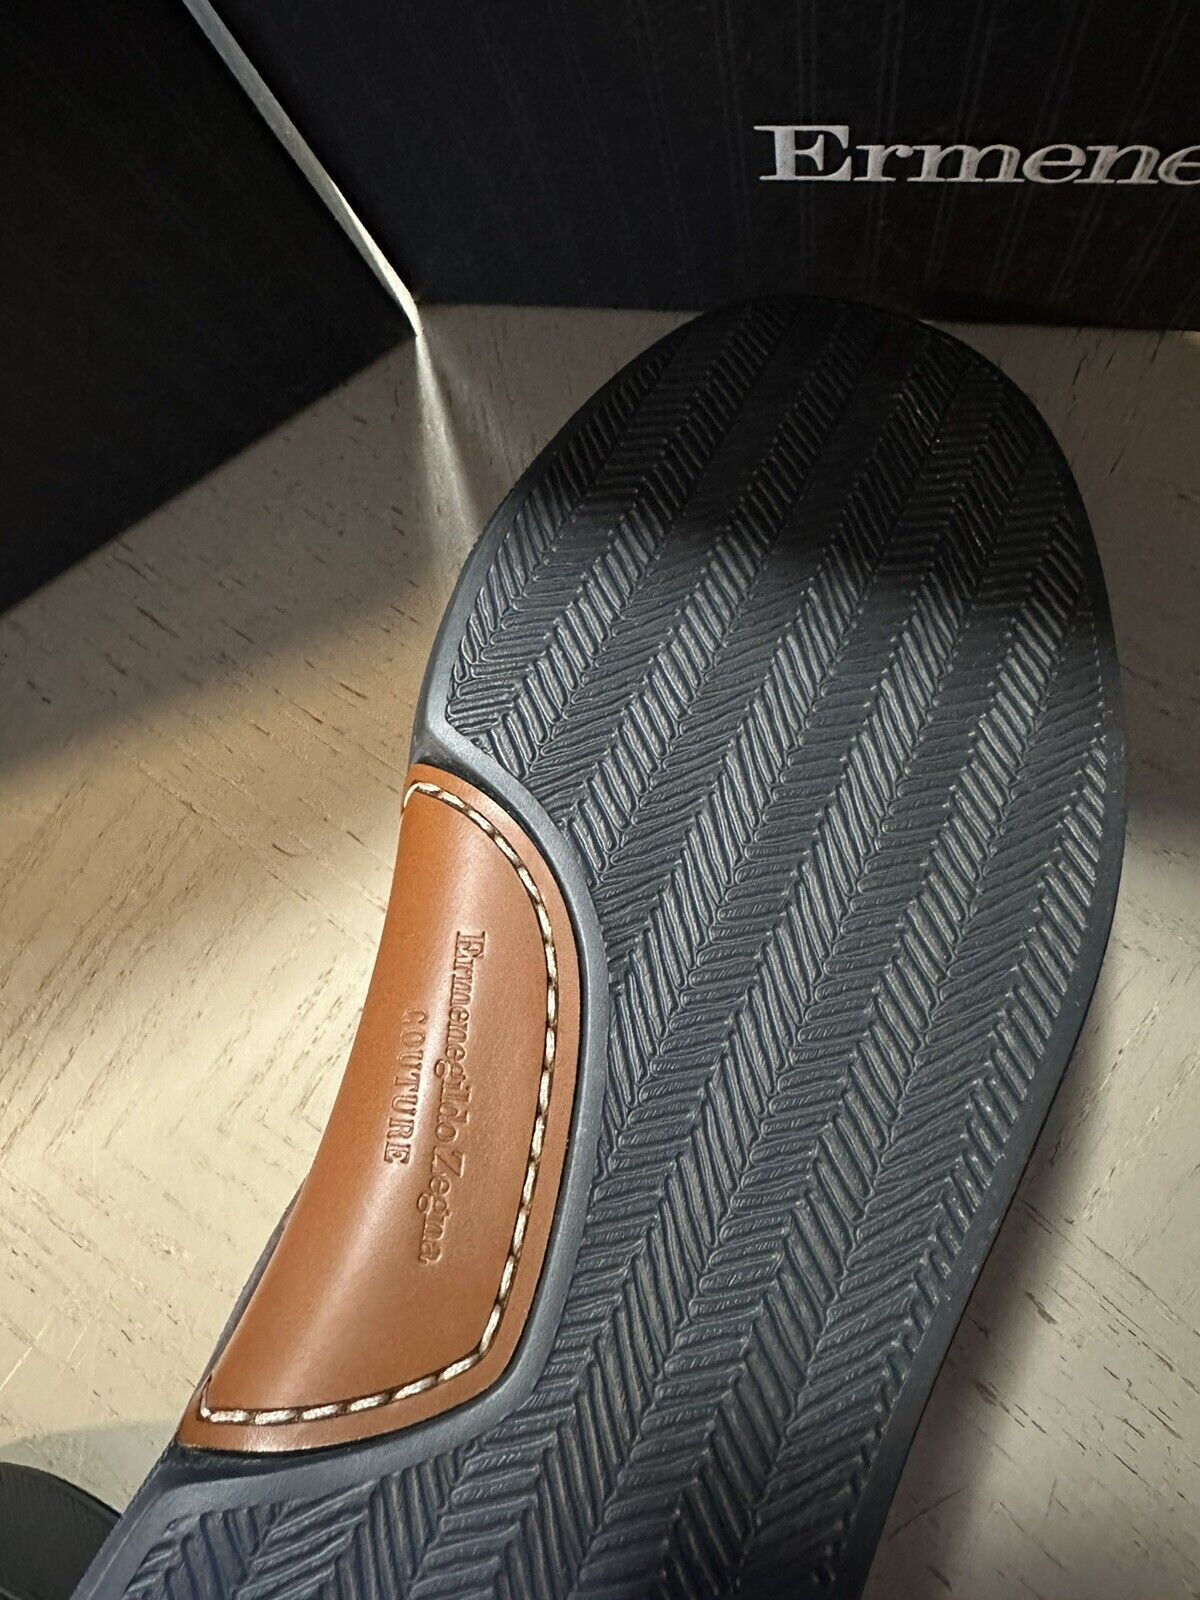 New $850 Ermenegildo Zegna Couture Suede/Leather Sneakers Dark Gray 7 US/40 Eu